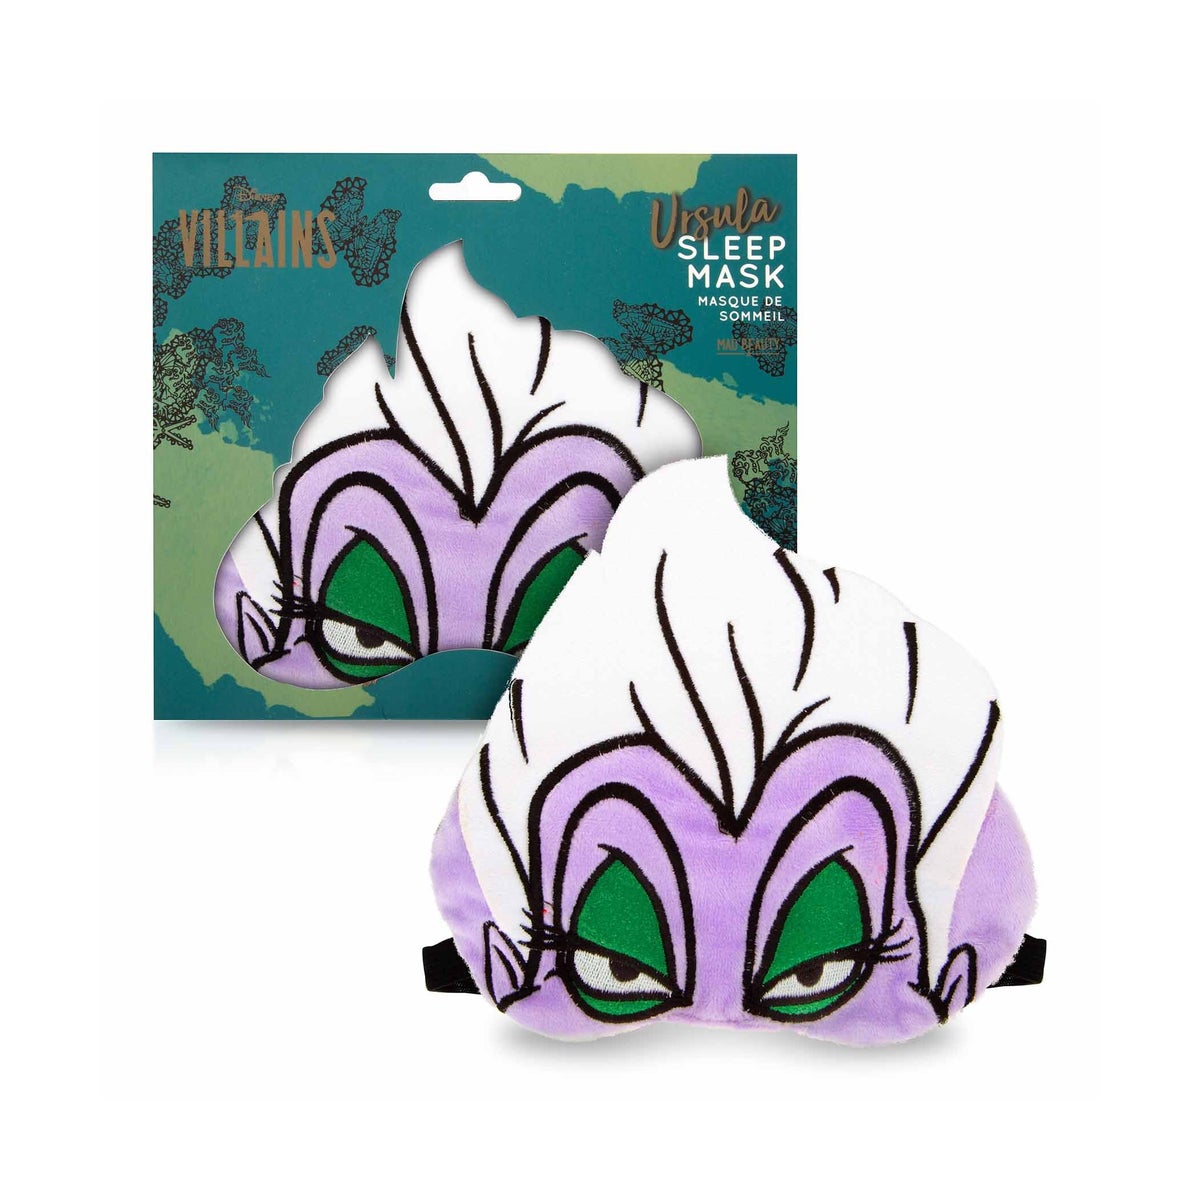 Disney Villains - Sleep Mask Ursula